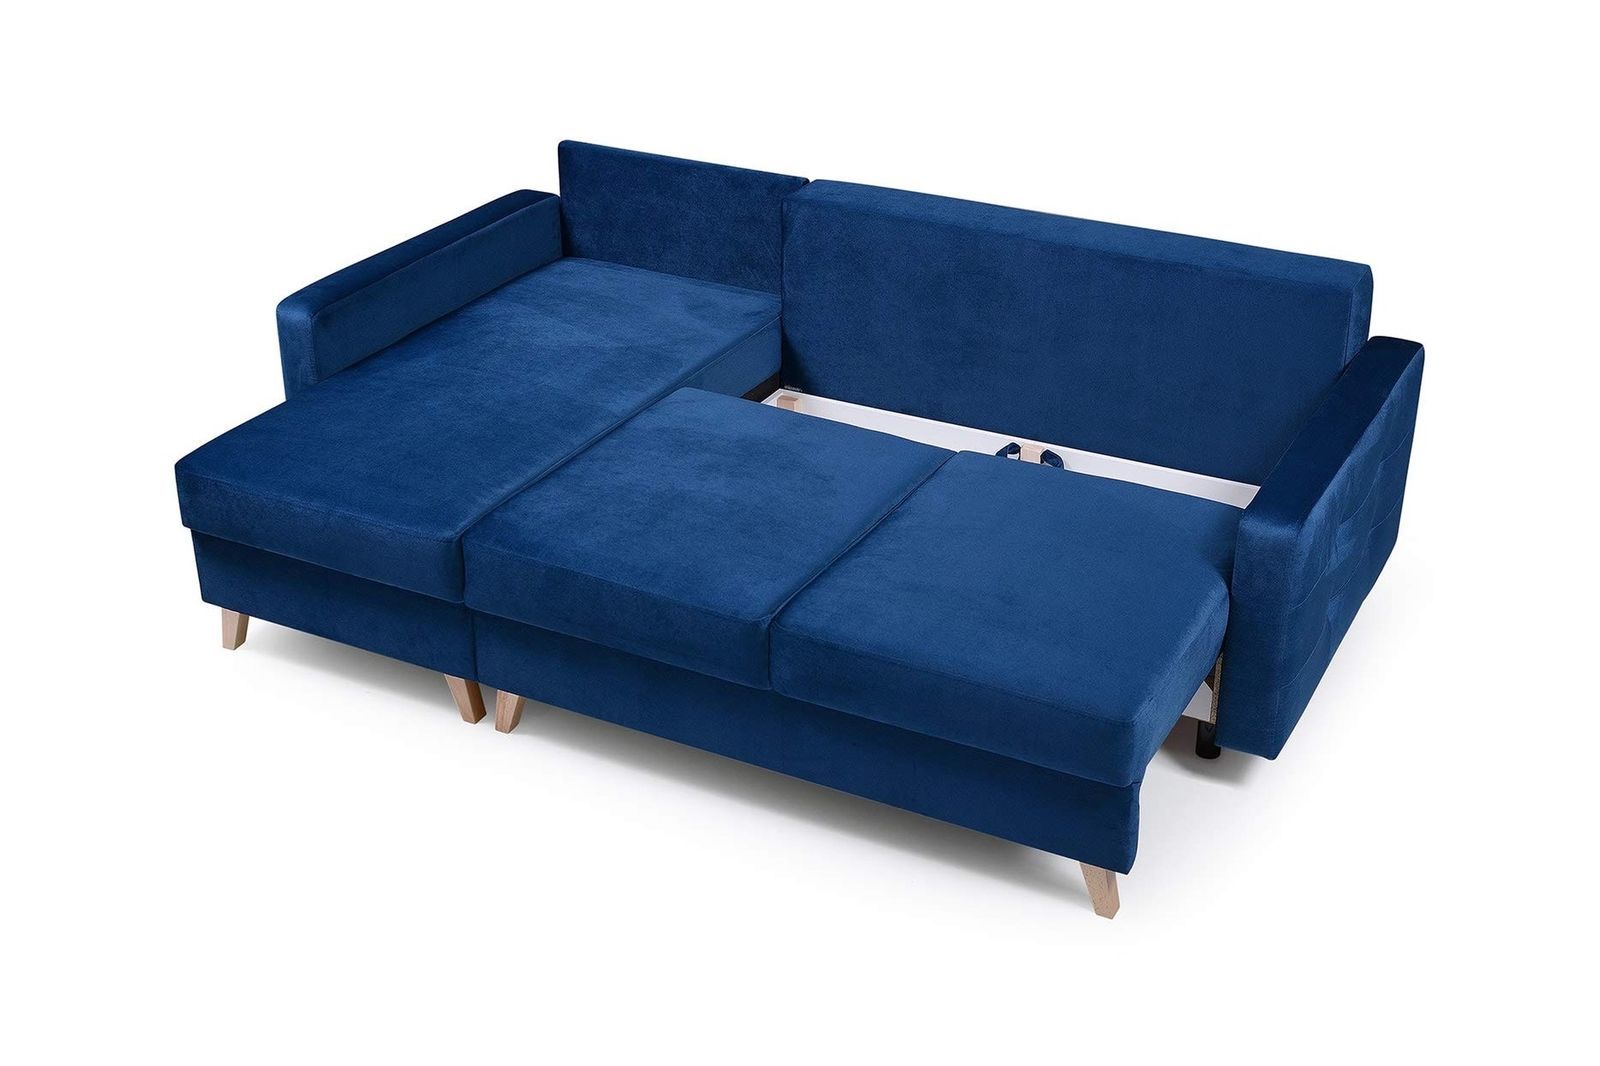 vegas futon sectional sofa bed walmart